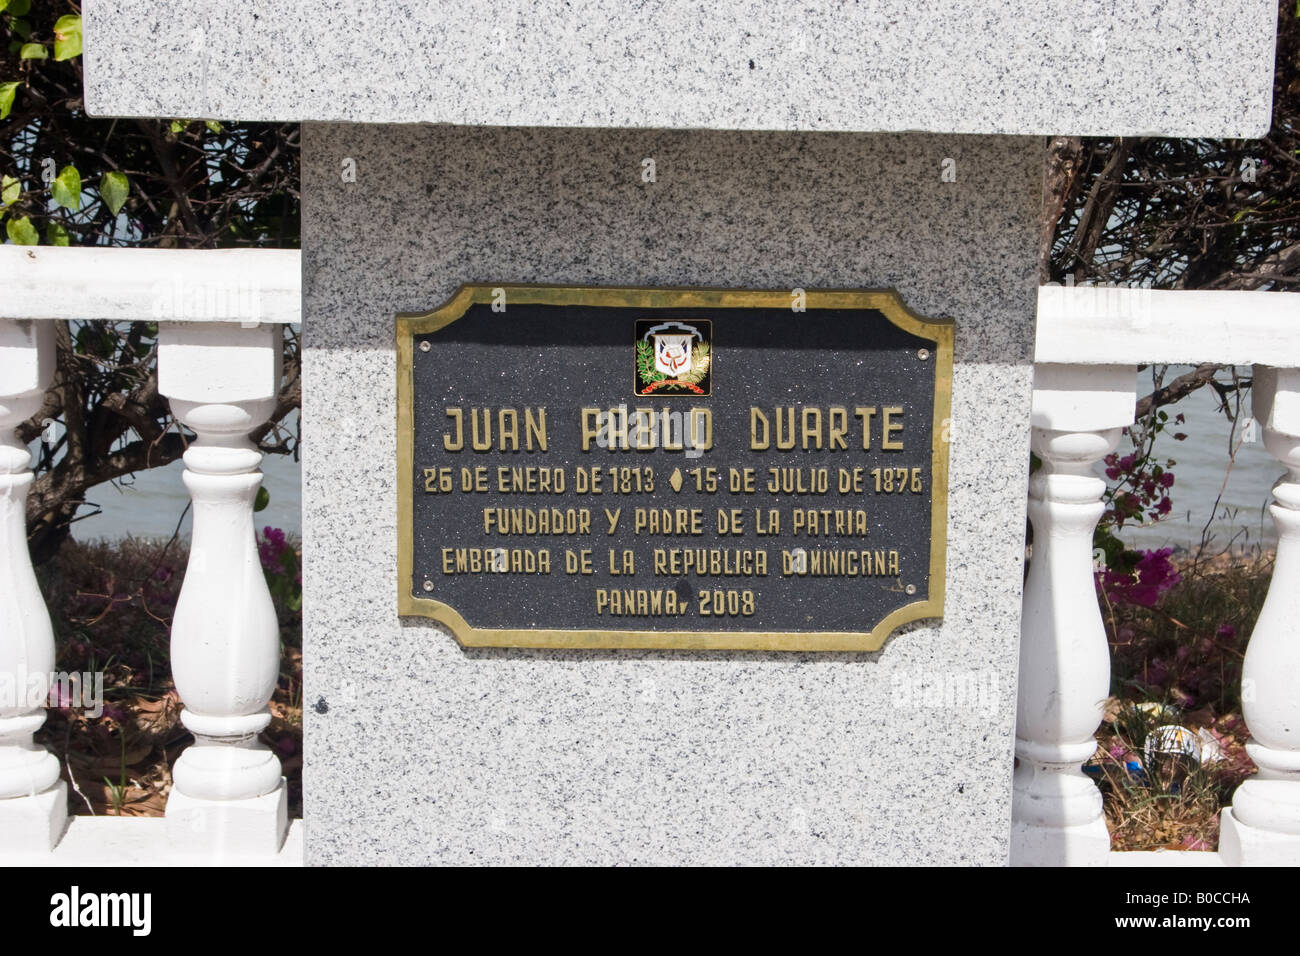 Juan Pablo Duarte Dominican Republic Forefather Memorial Plaque Stock Photo